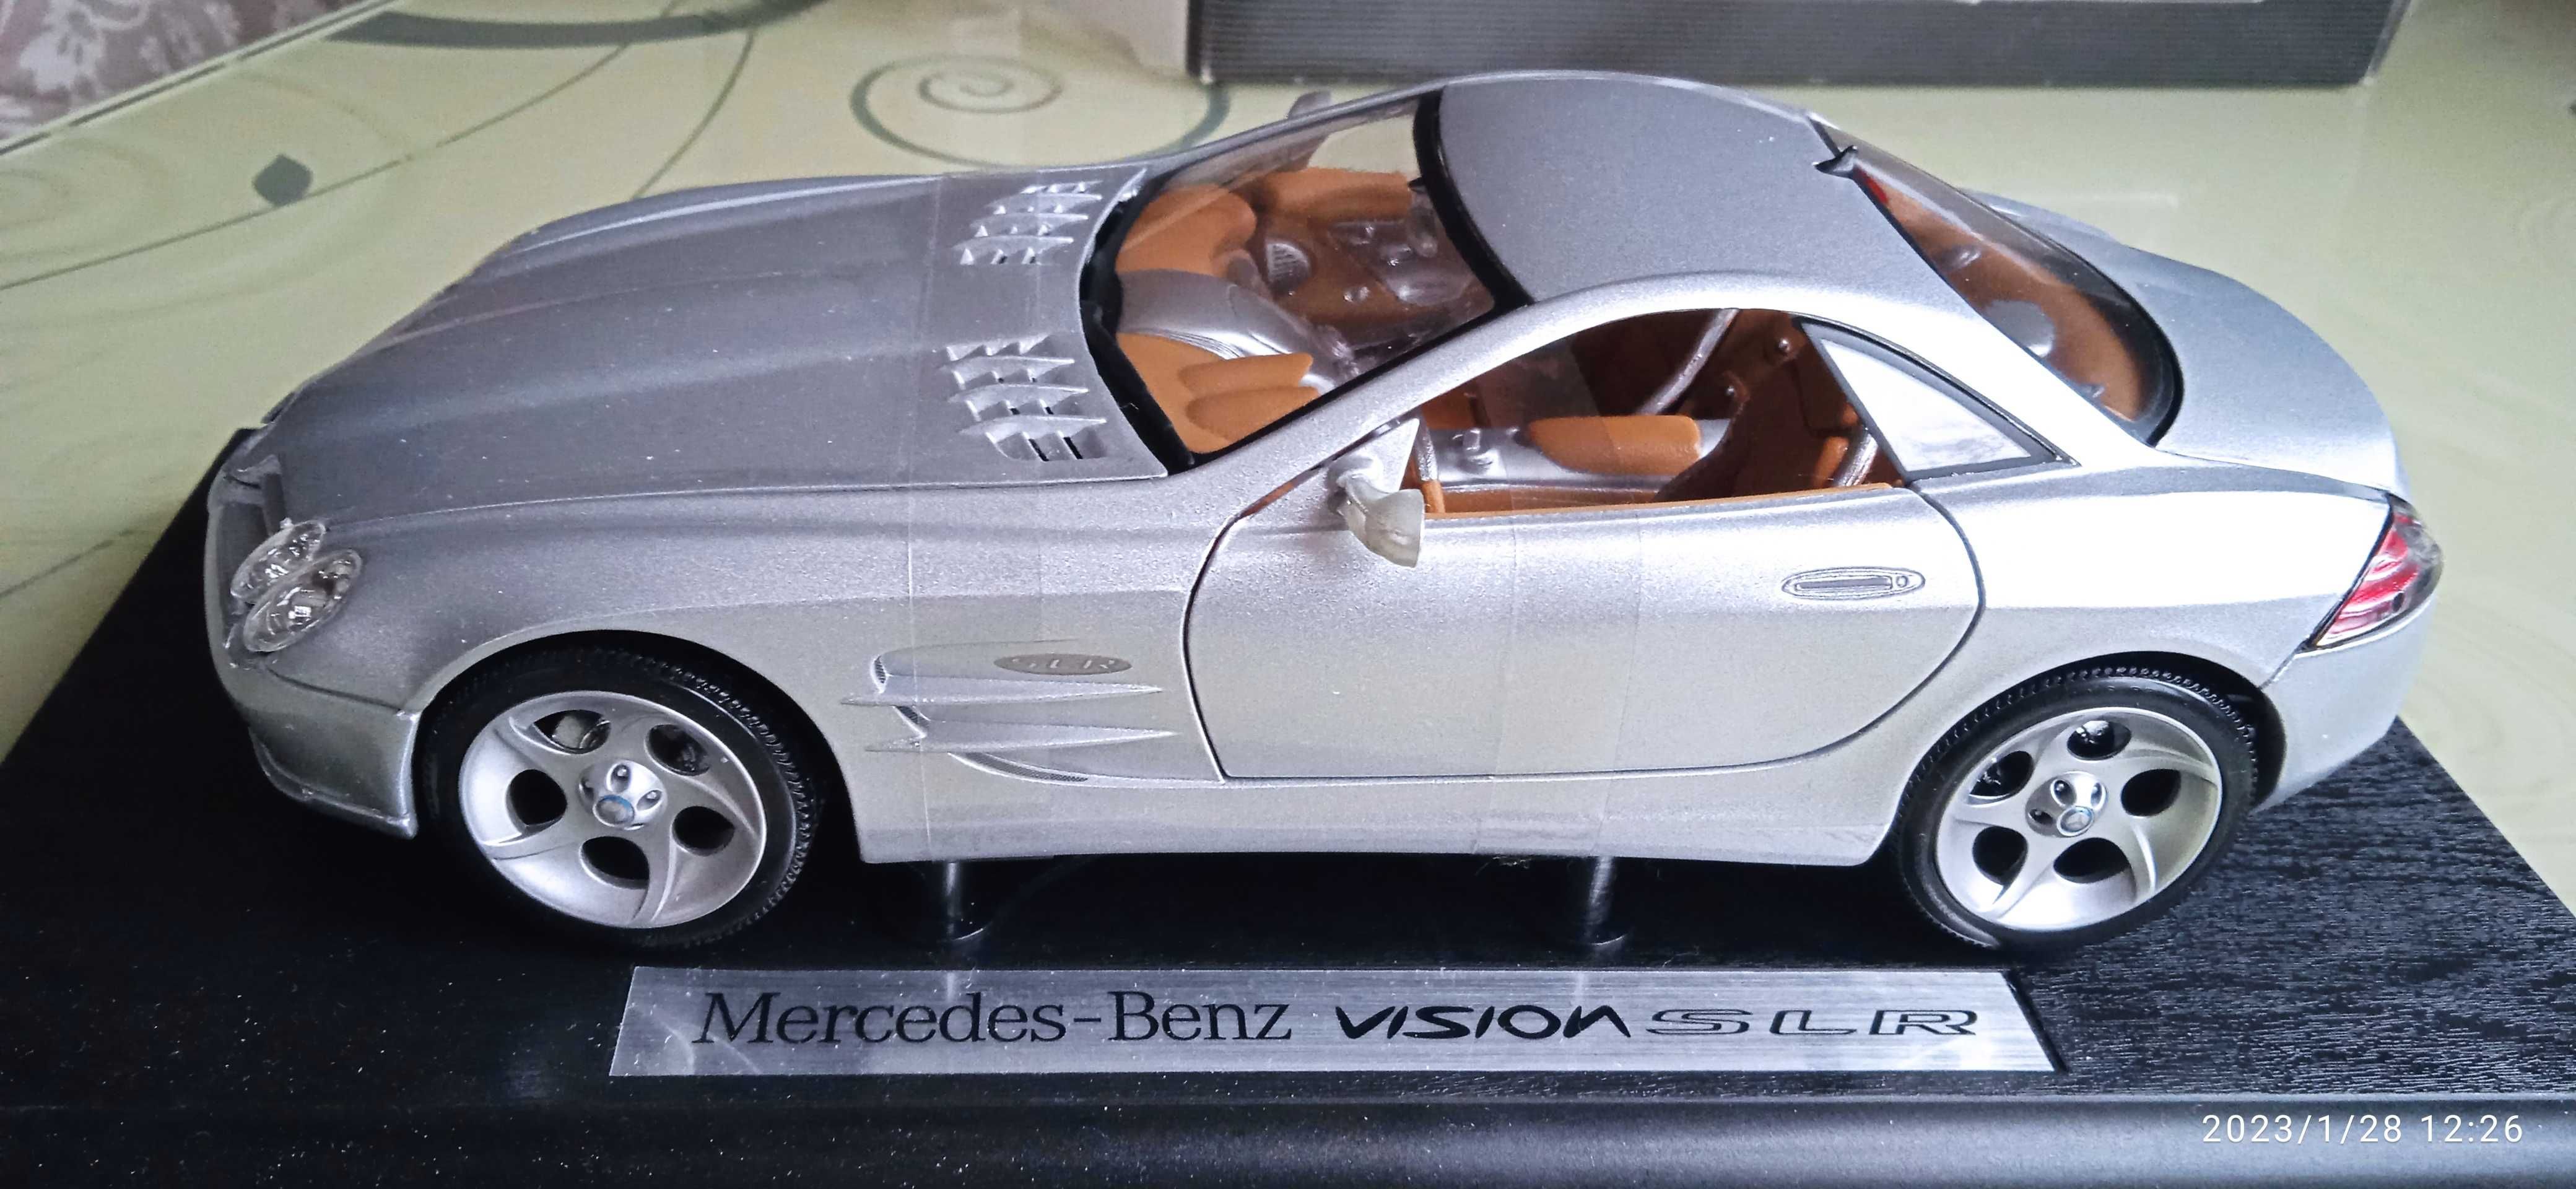 модель 1/18 mercedes benz vision slr